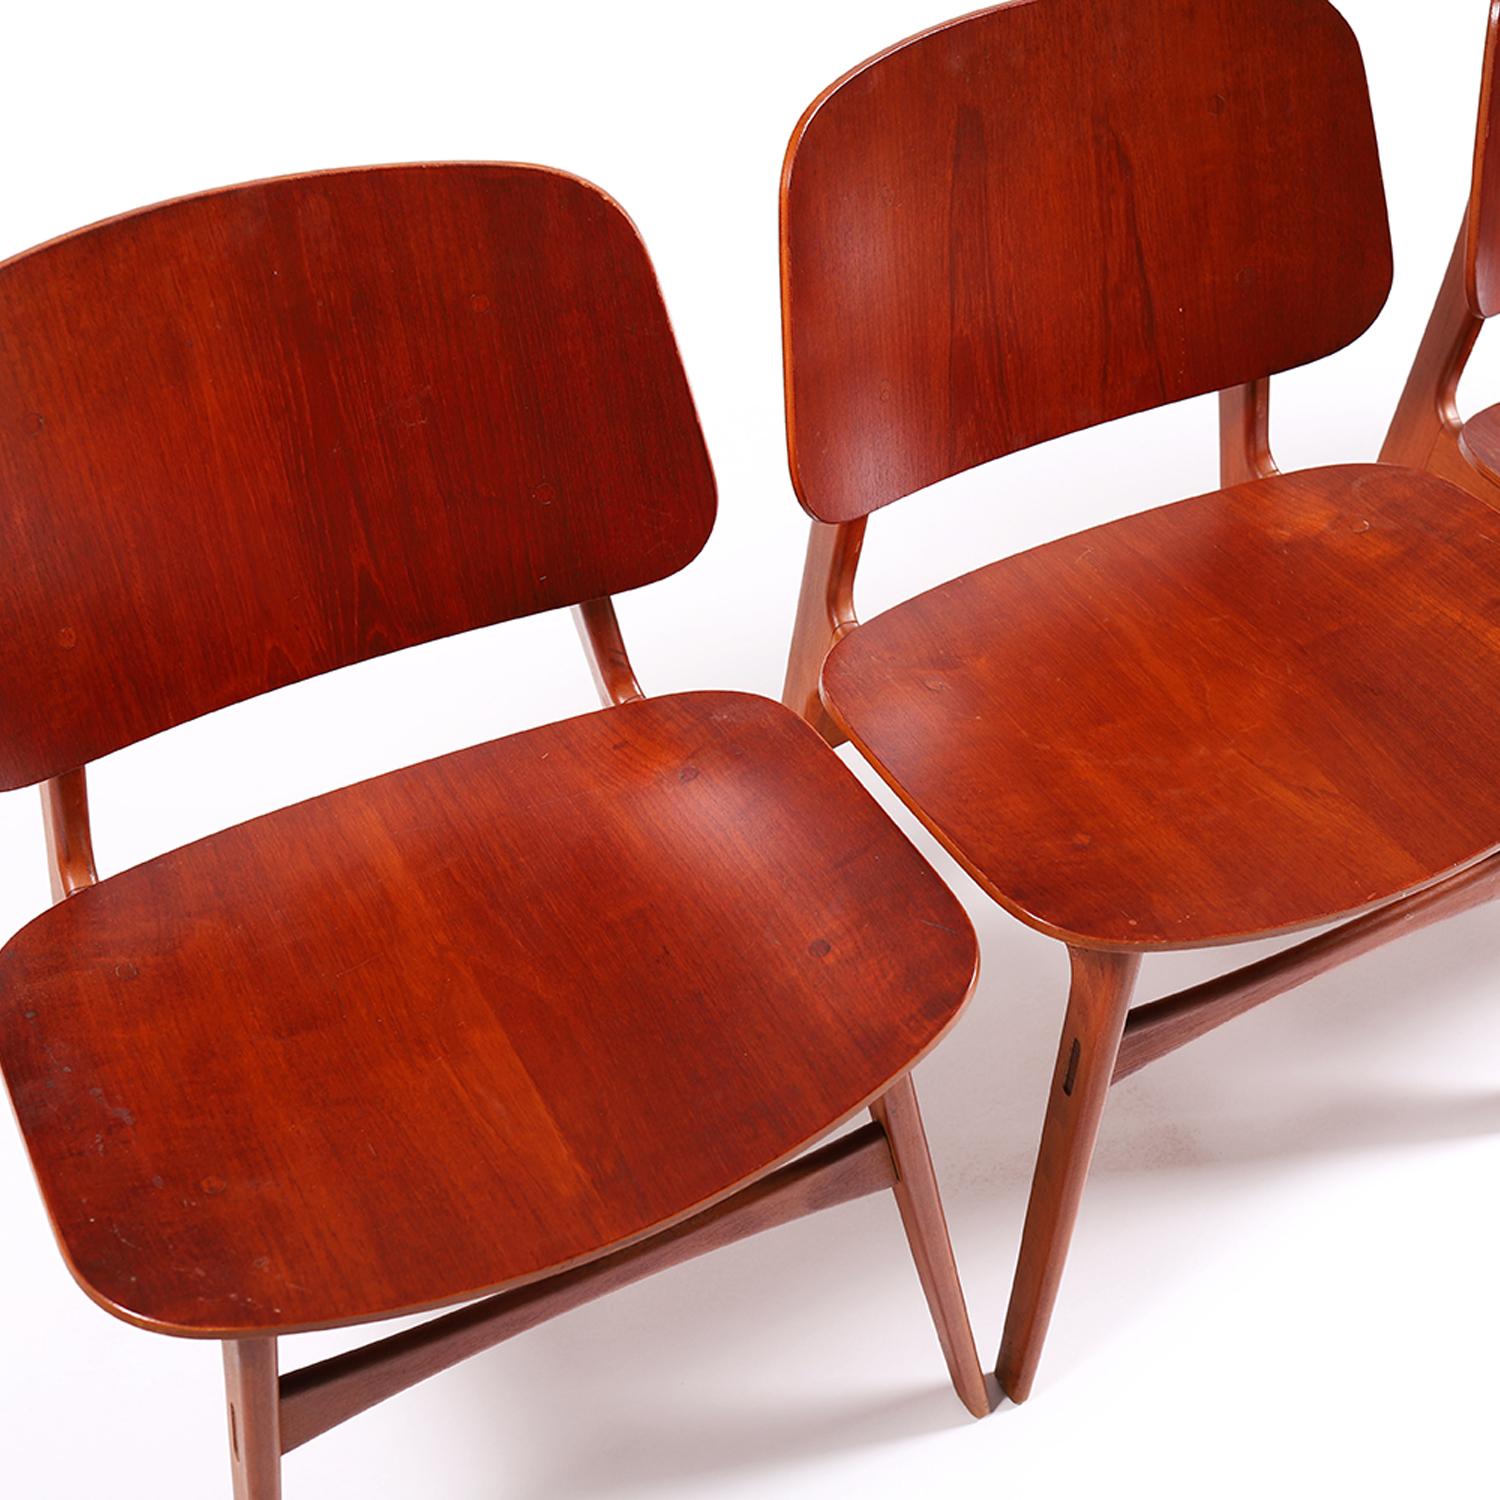 20th Century Scandinavian Modern Teak & Beech Dining Chairs by Borge Mogensen Model 155